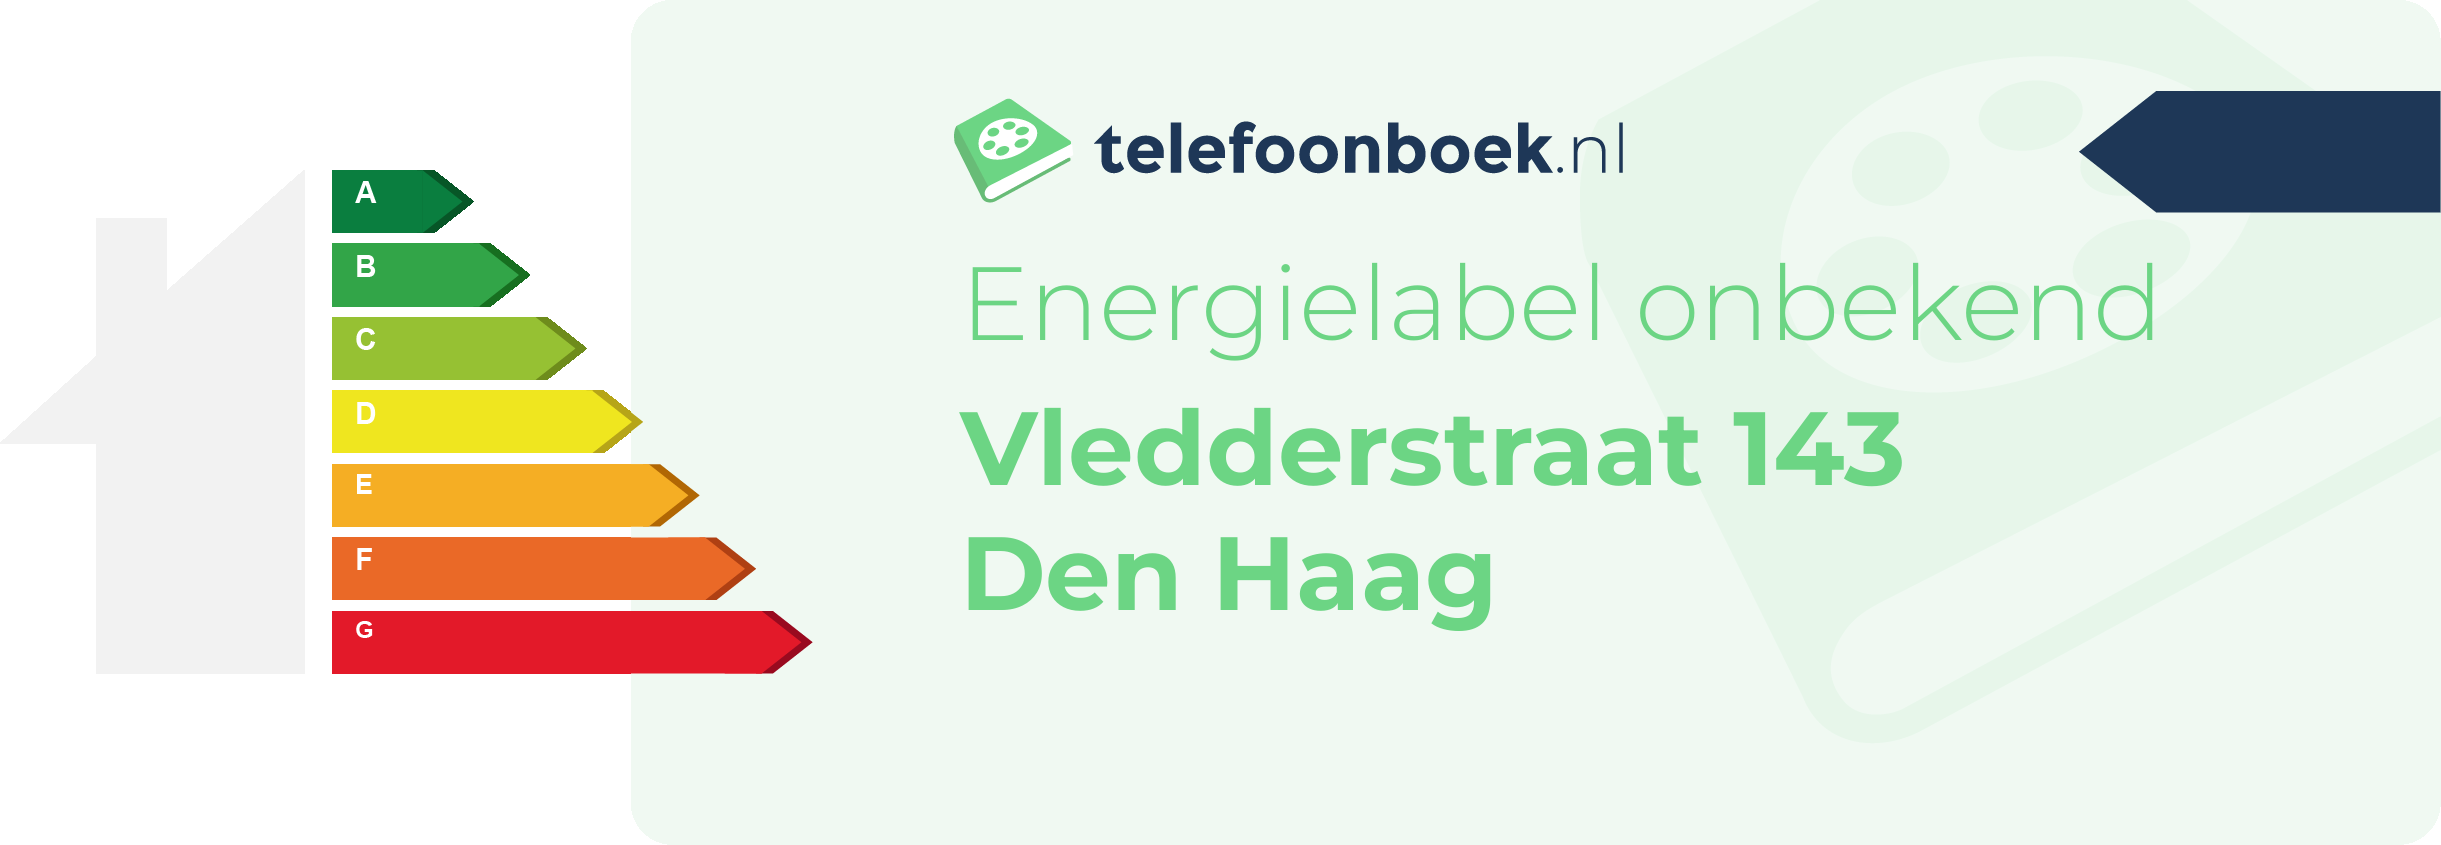 Energielabel Vledderstraat 143 Den Haag